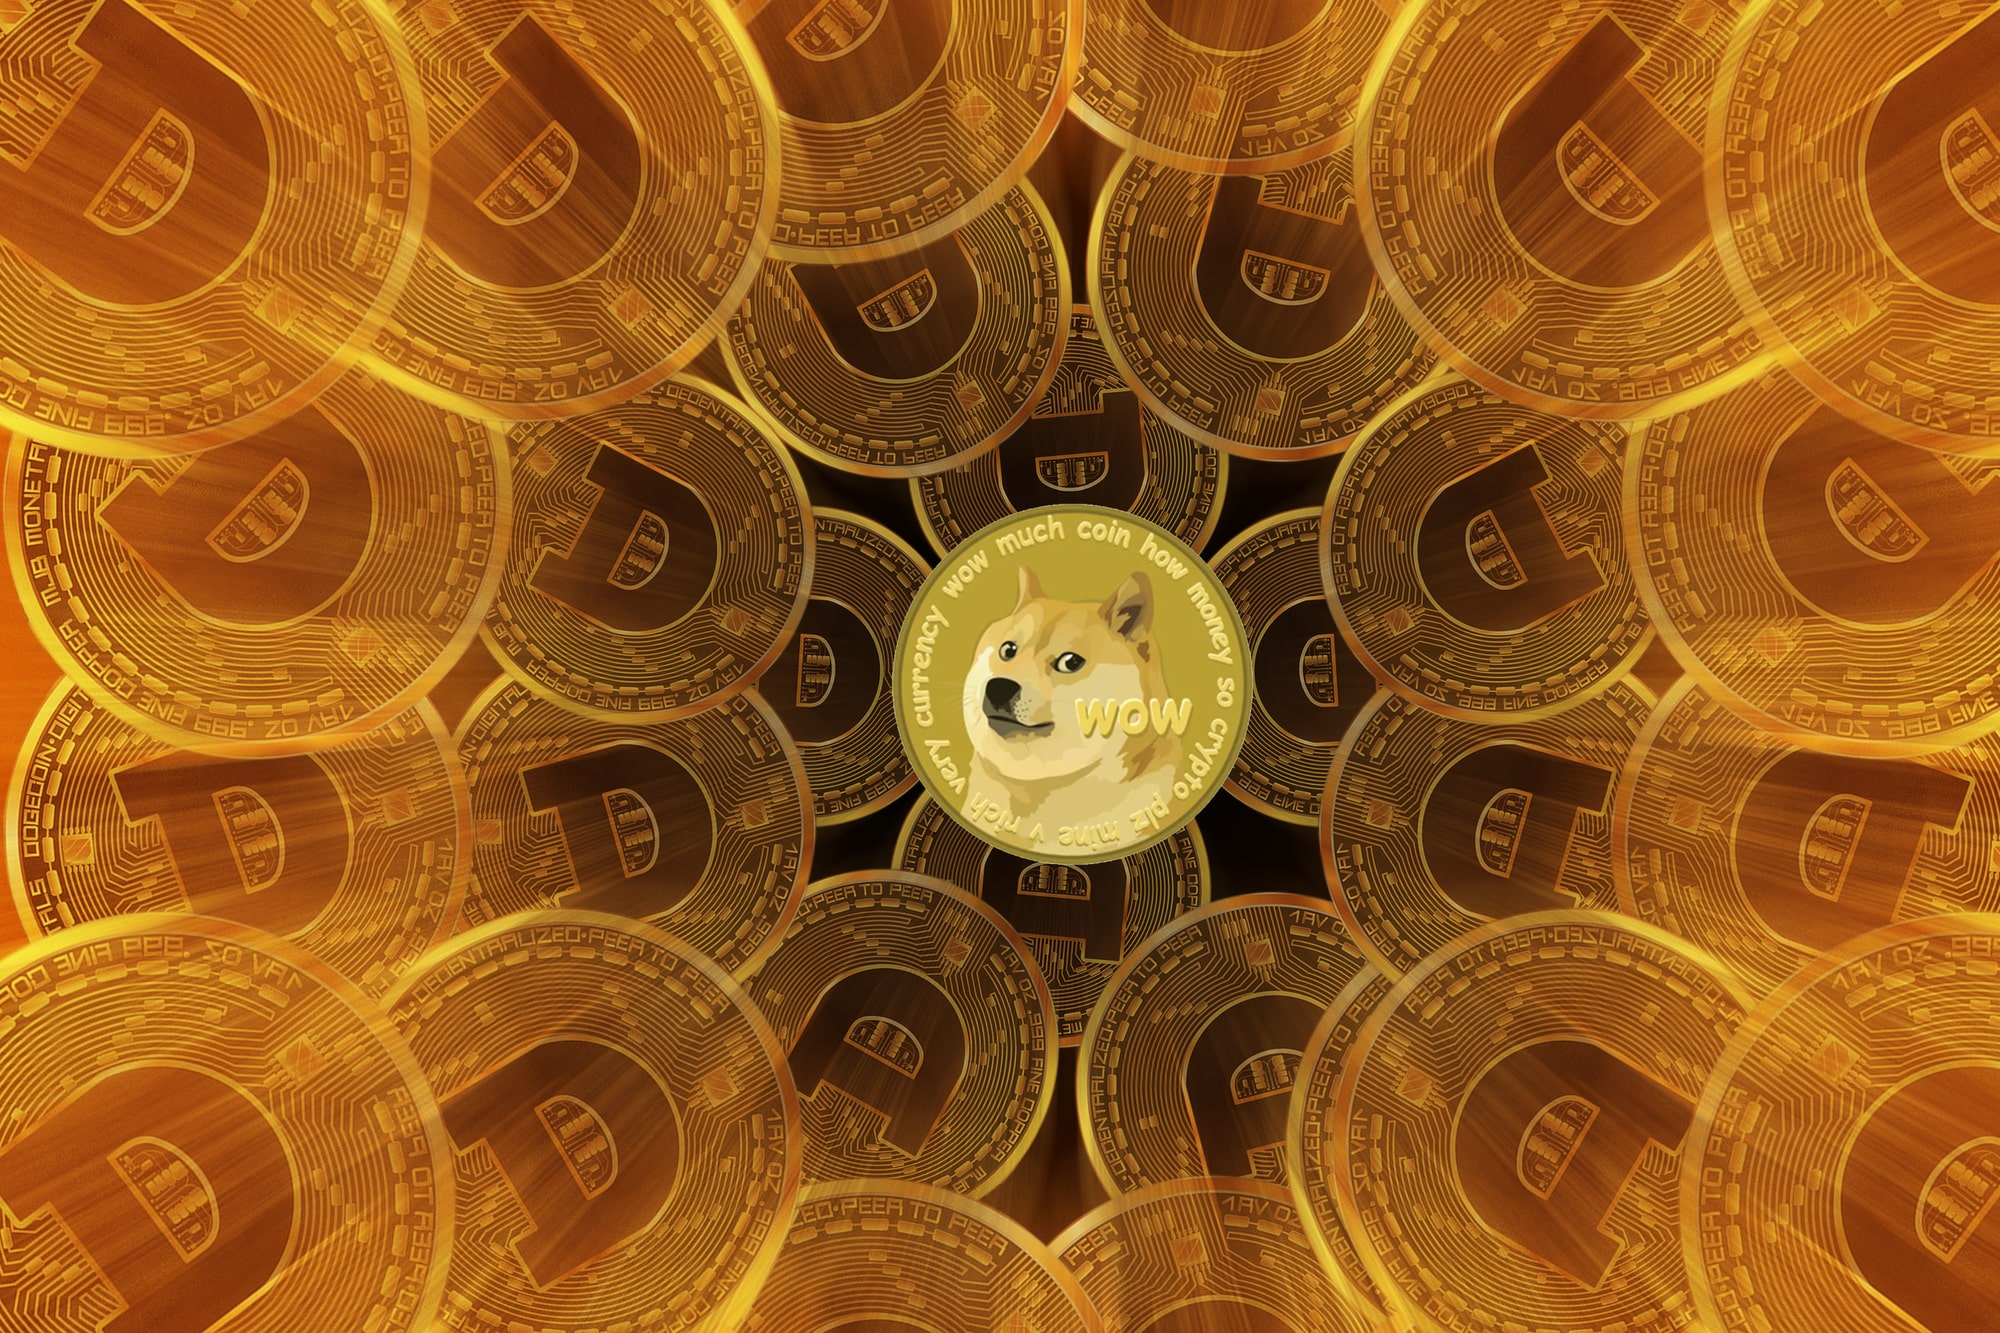 Dogecoin Killer? The Coin Bureau head is eyeing the Shiba Inu potential